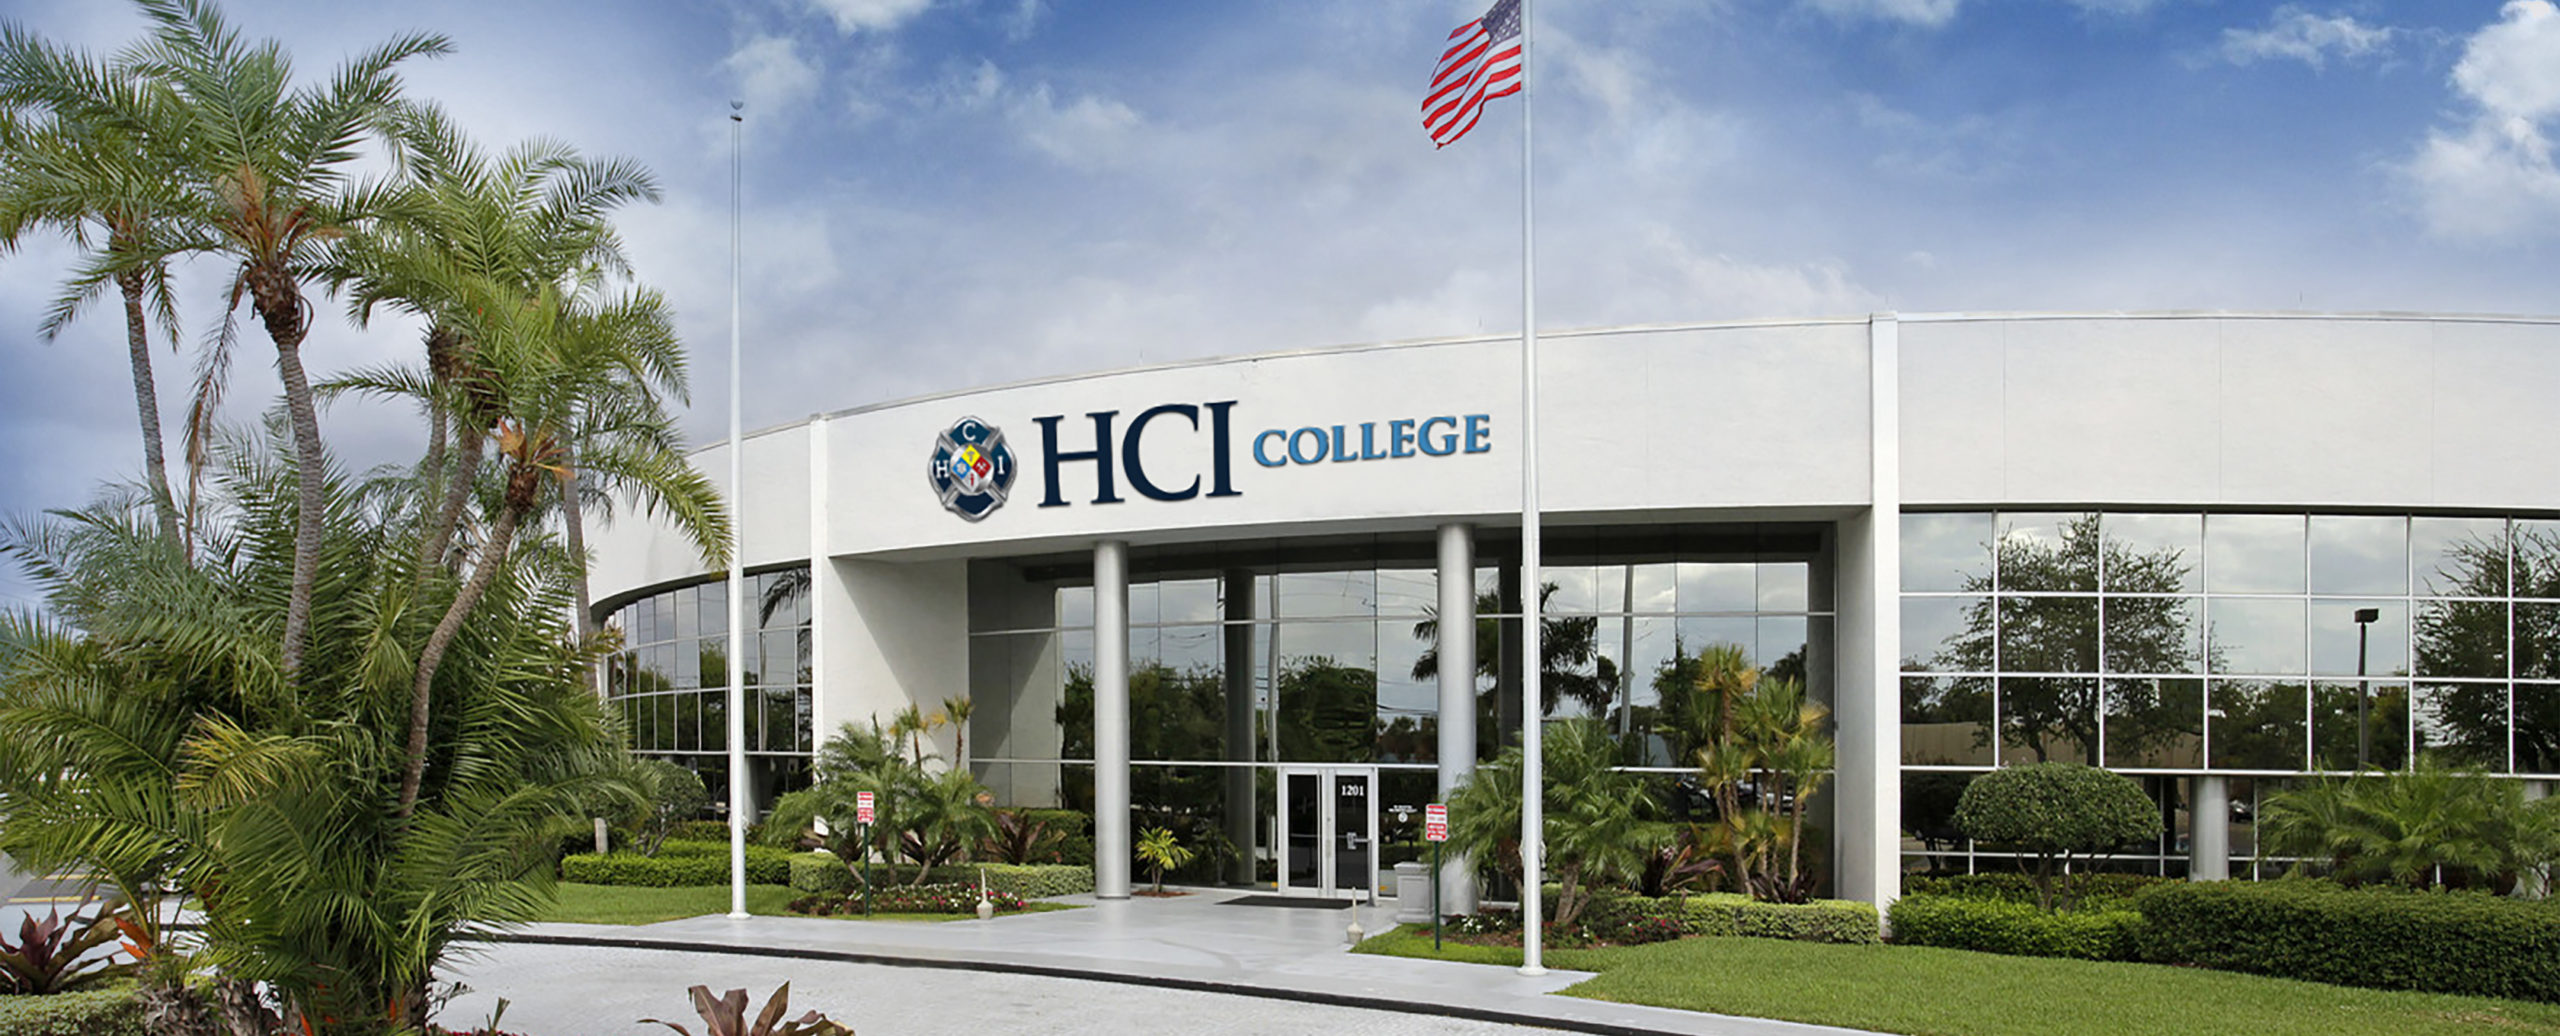 HCI College - Fort Lauderdale - HCI College